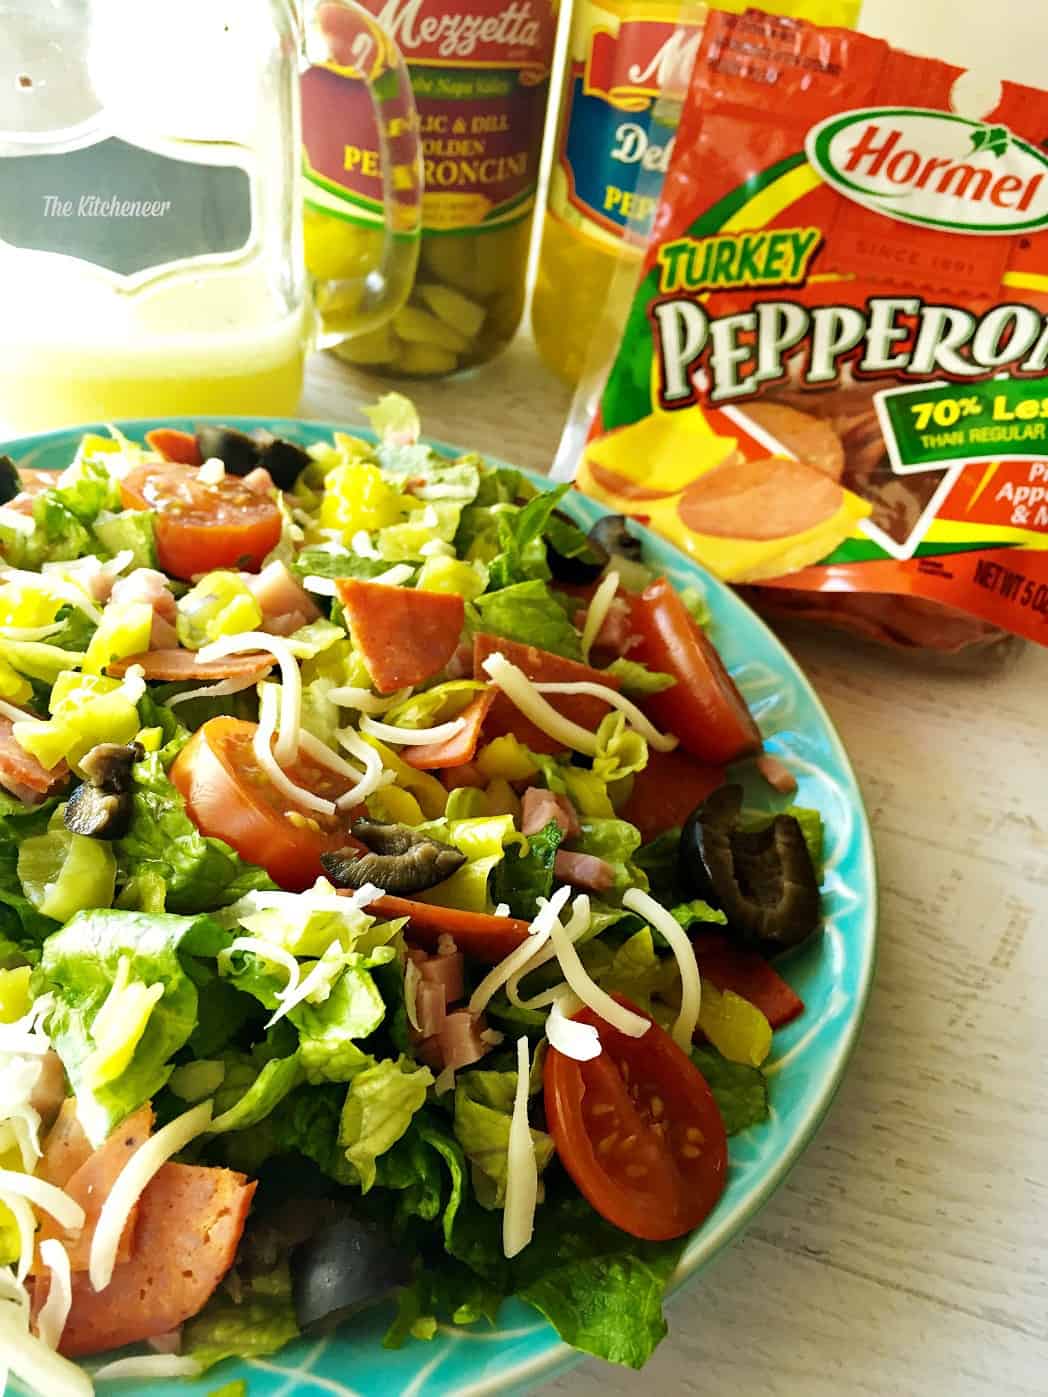 Antipasto-Salad